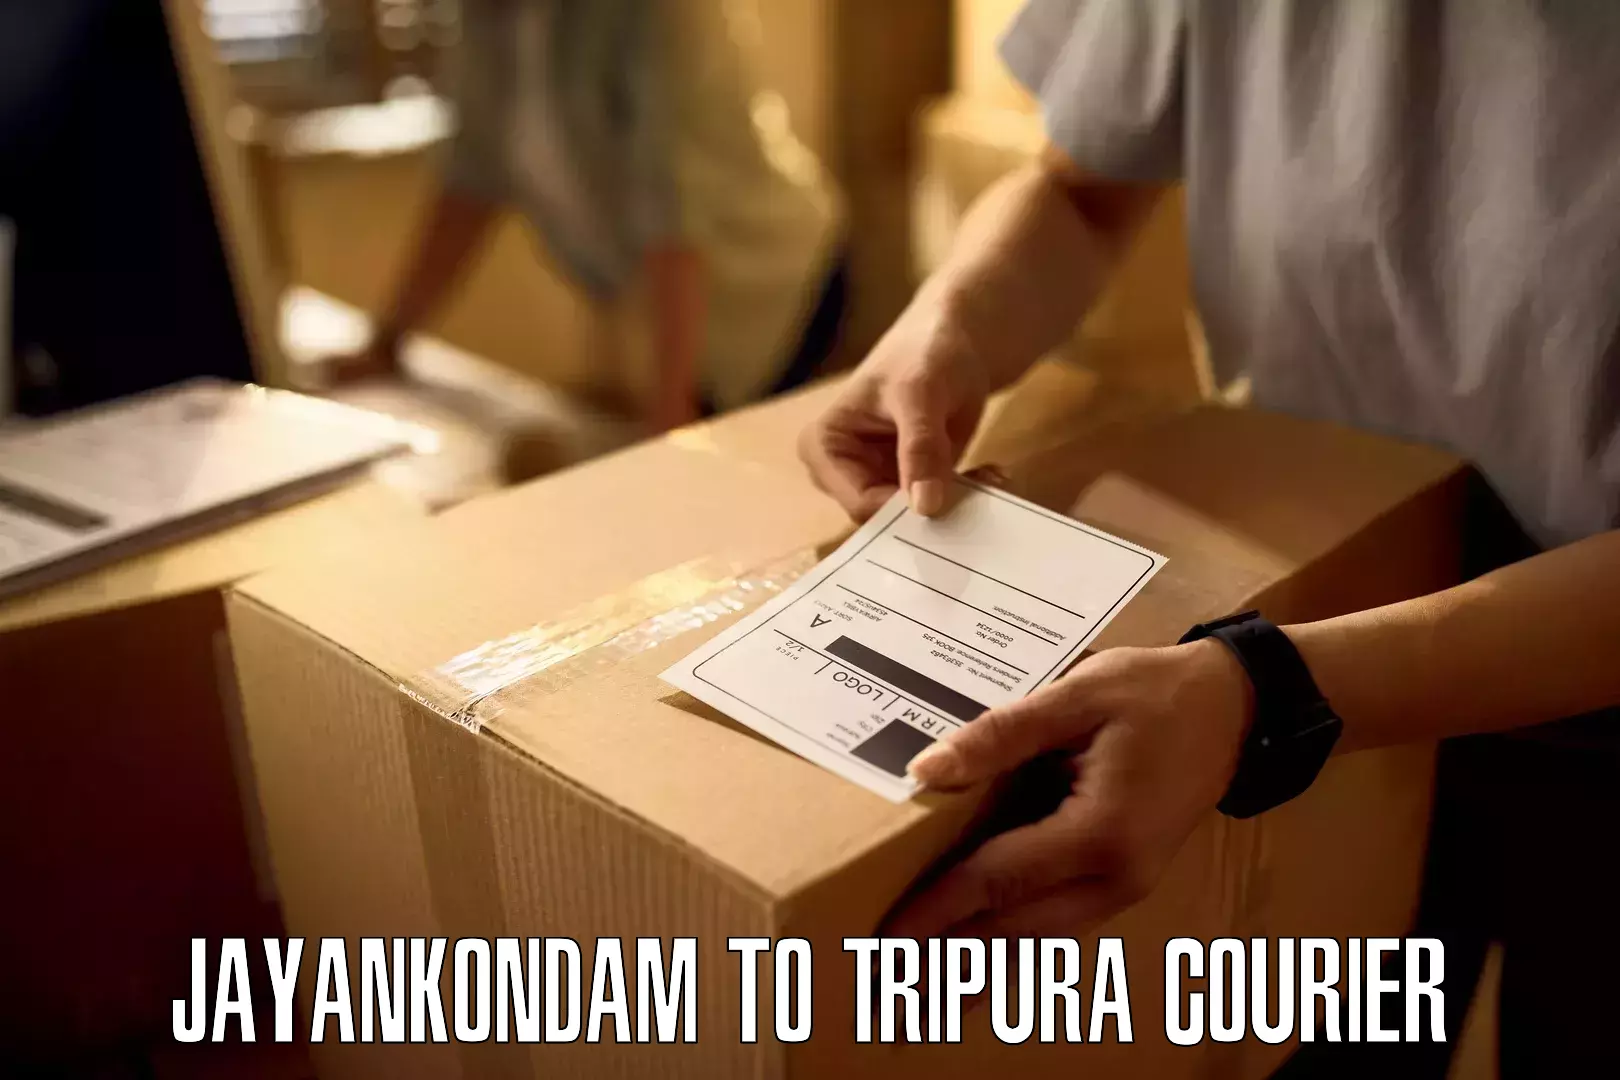 On-call courier service Jayankondam to Tripura